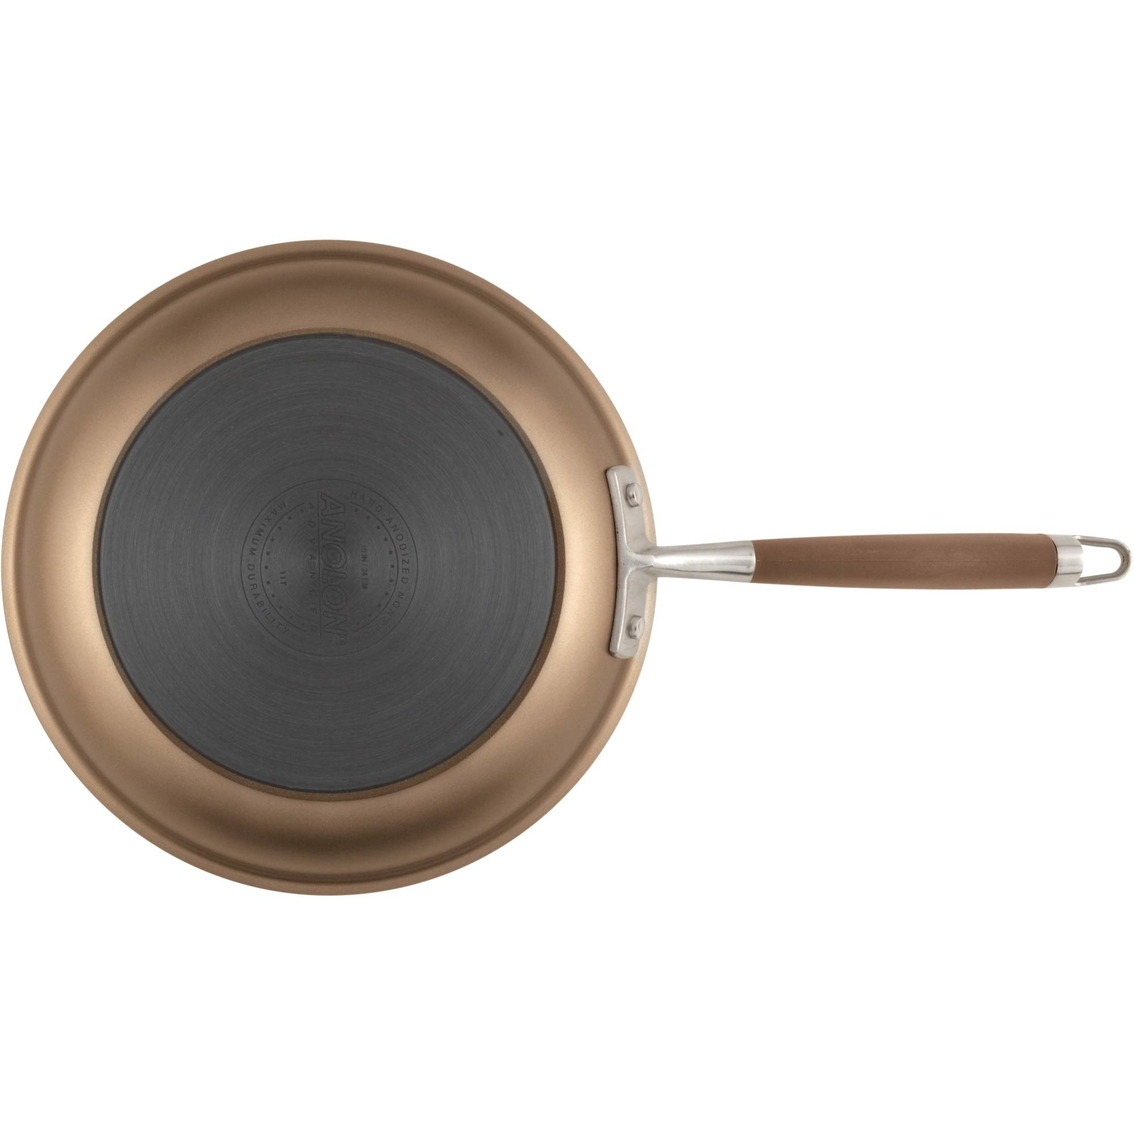 Anolon Advanced Bronze 14 Hard Anodized Nonstick Large Frying Pan